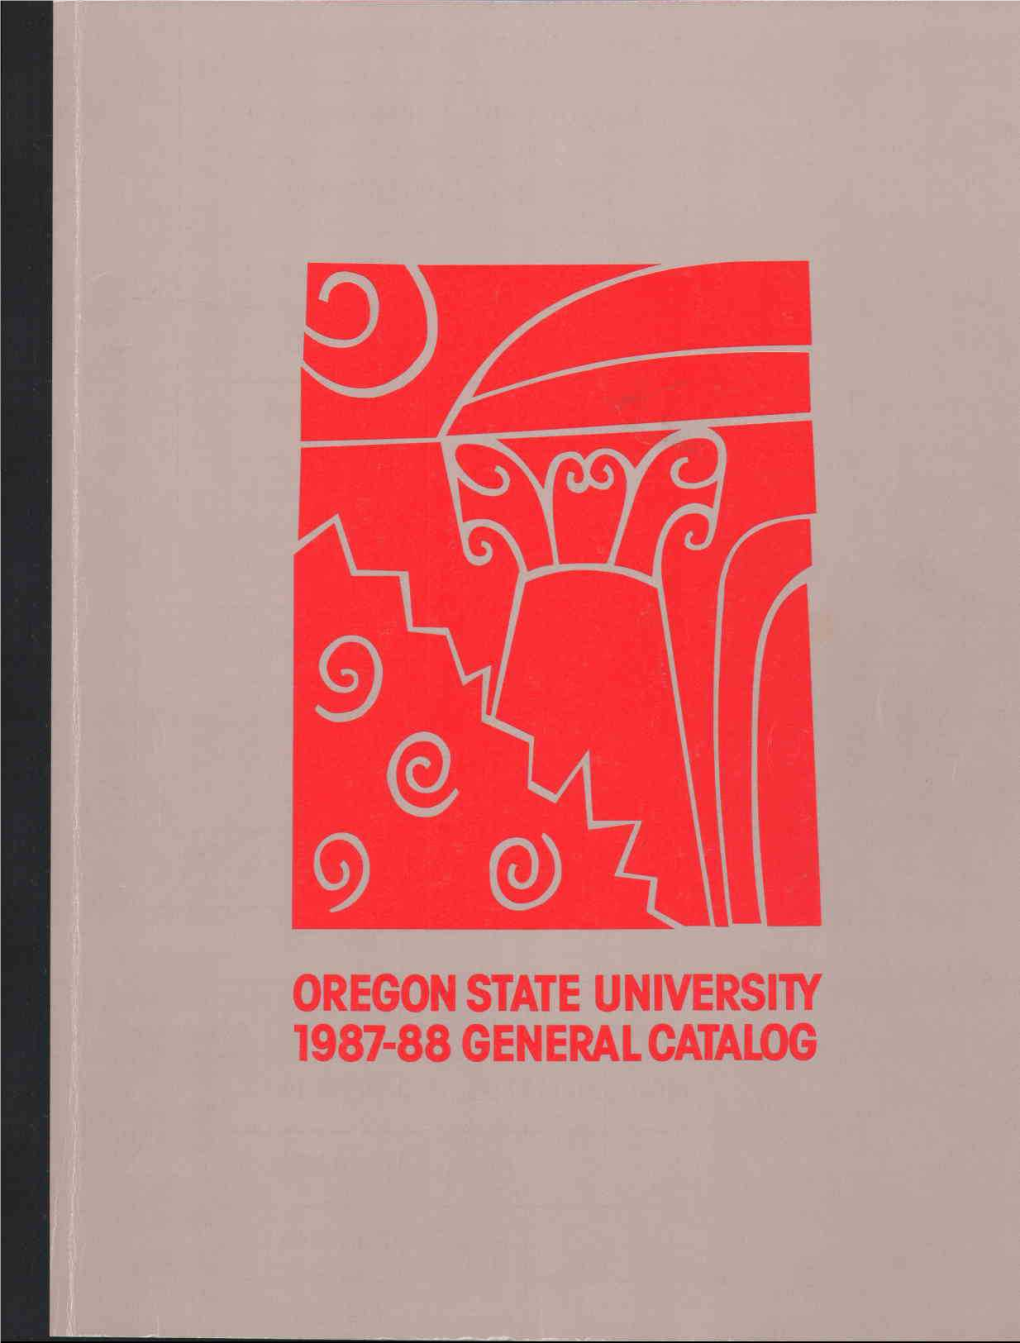 1987-88 GENERAL CATALOG OREGON STATE UNIVERSITY 1987-88 GENERAL CATALOG a Guideto Readingthis Catalog